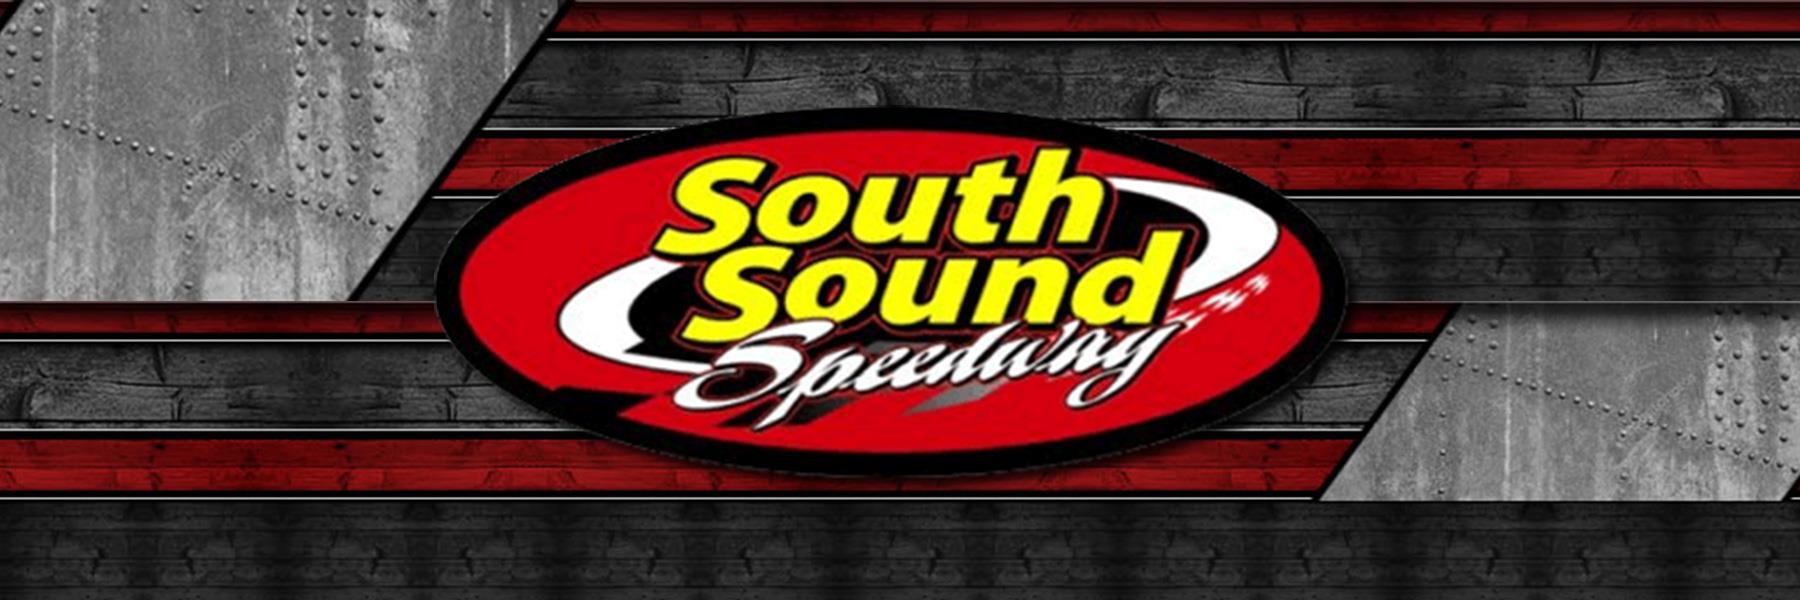 6/18/2022 - South Sound Speedway